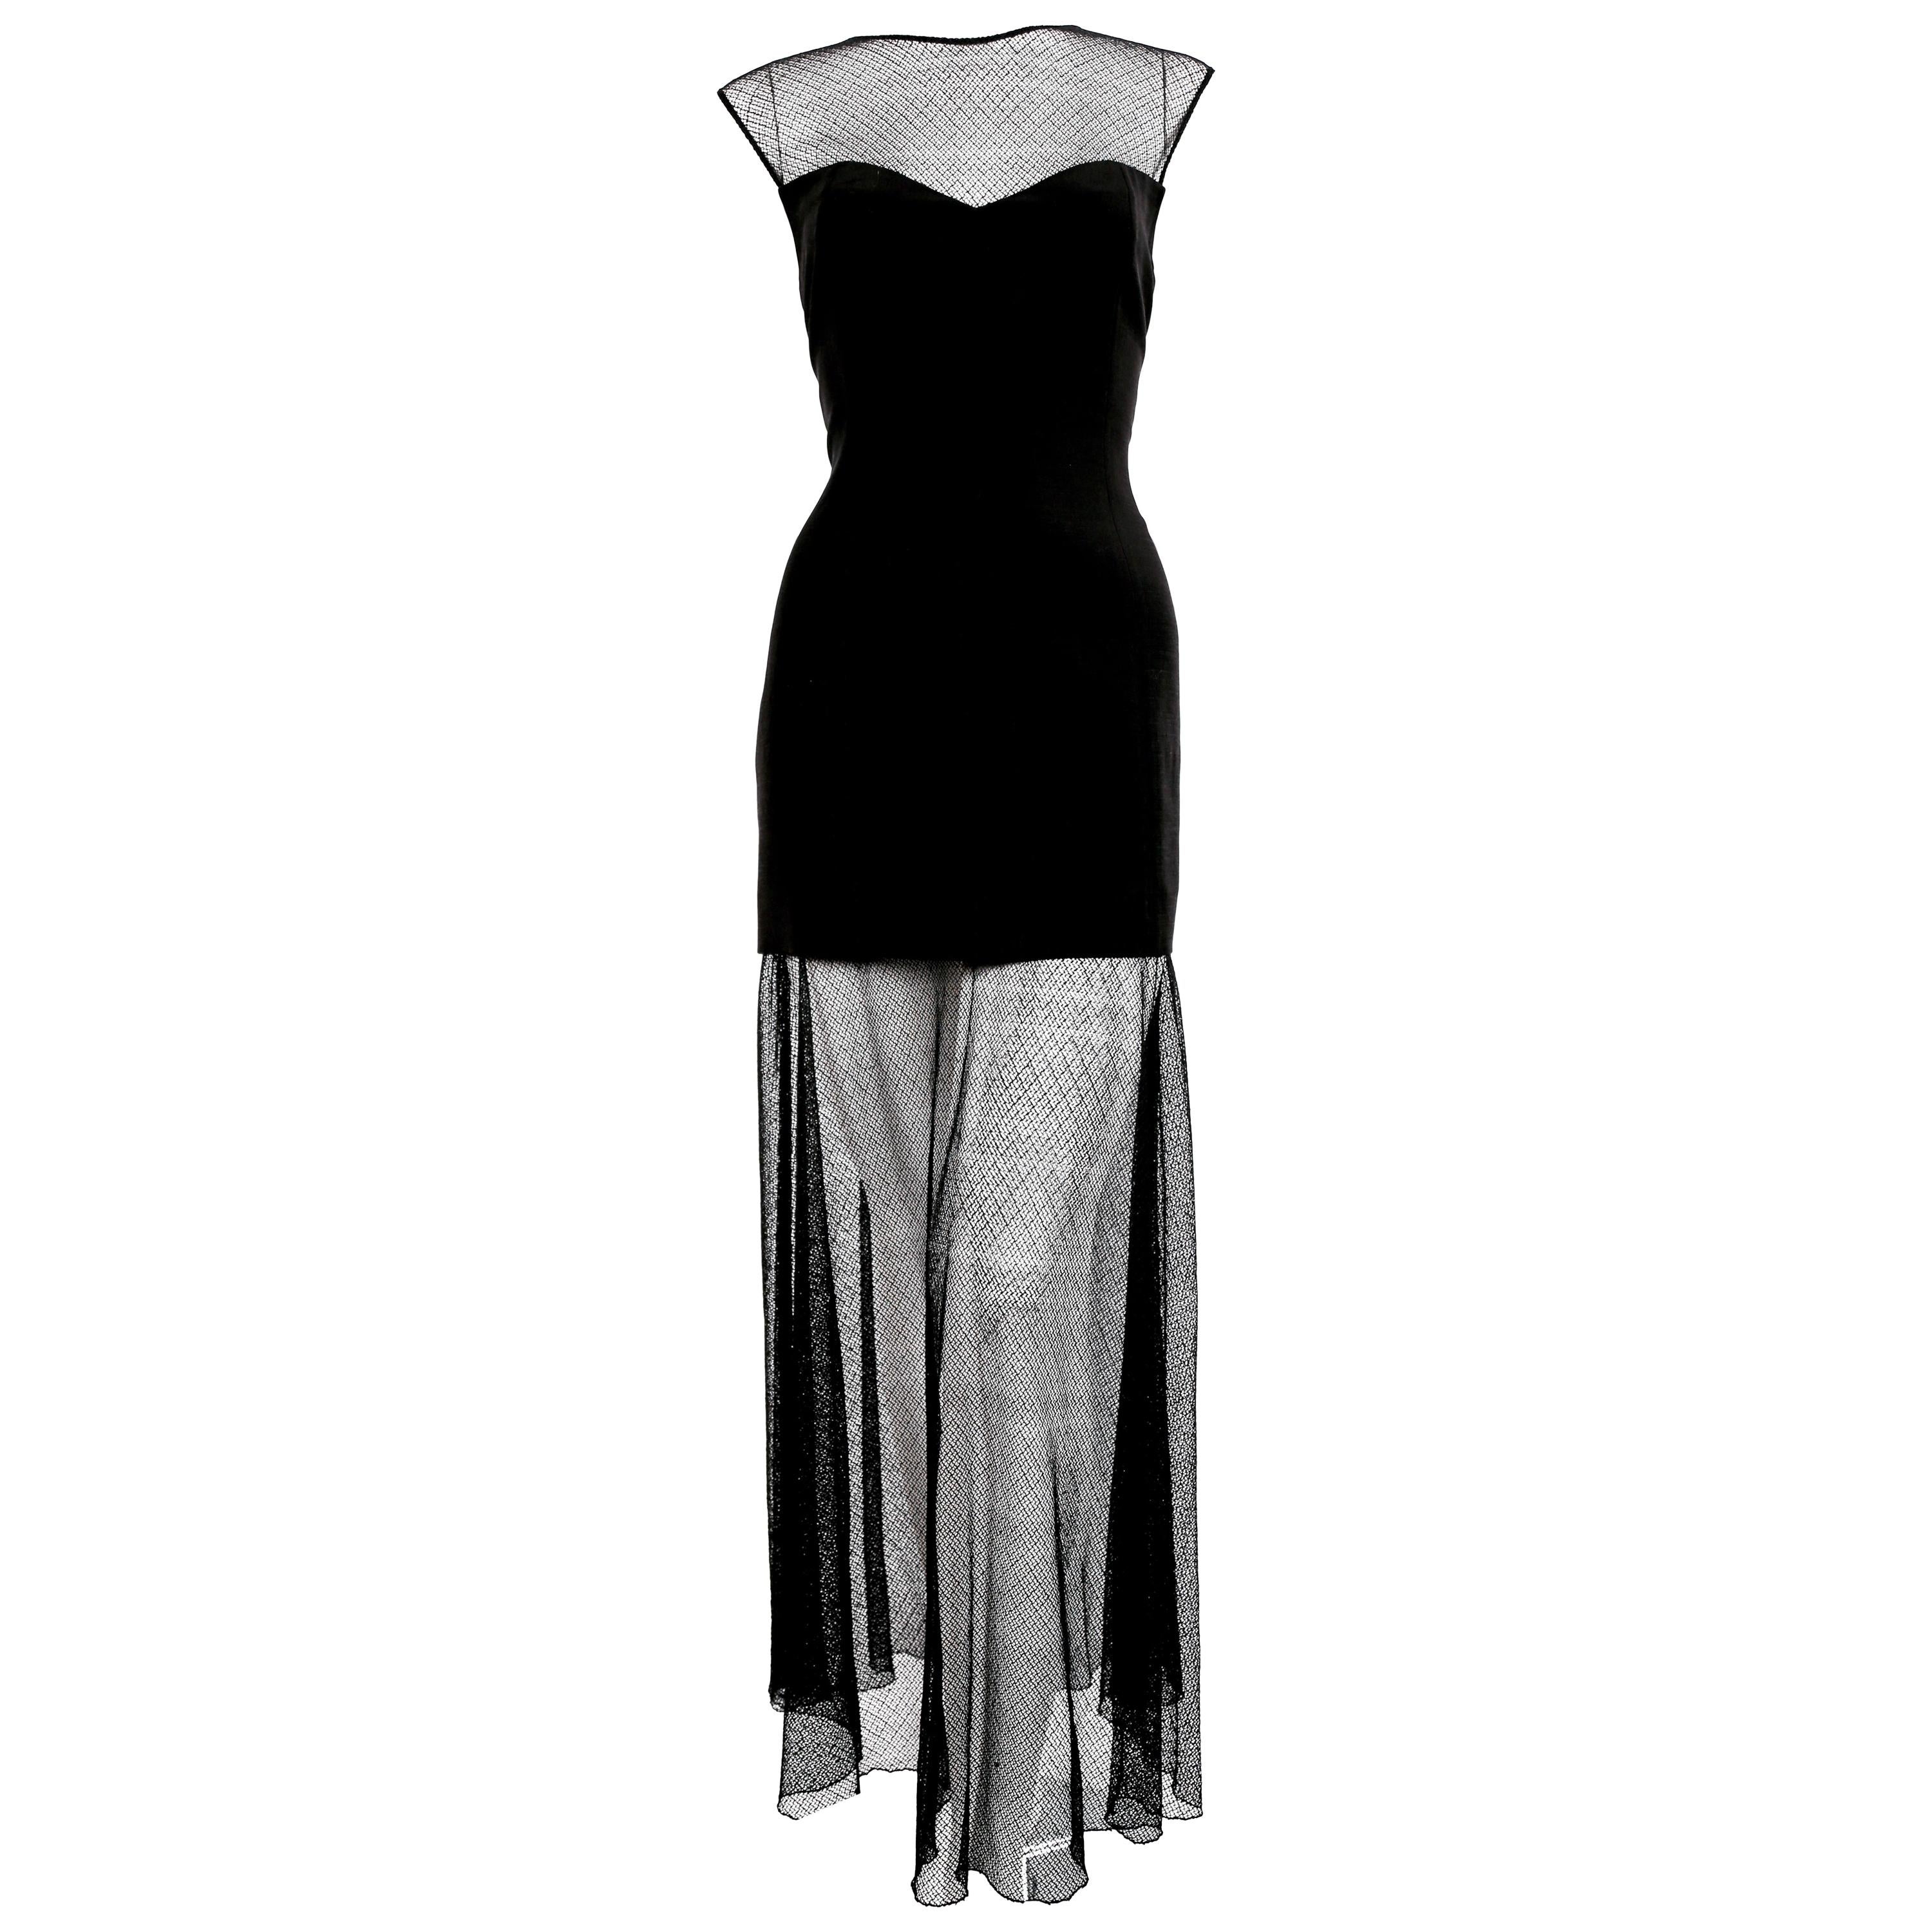 1980's KARL LAGERFELD black dress with sheer neckline and hemline For Sale